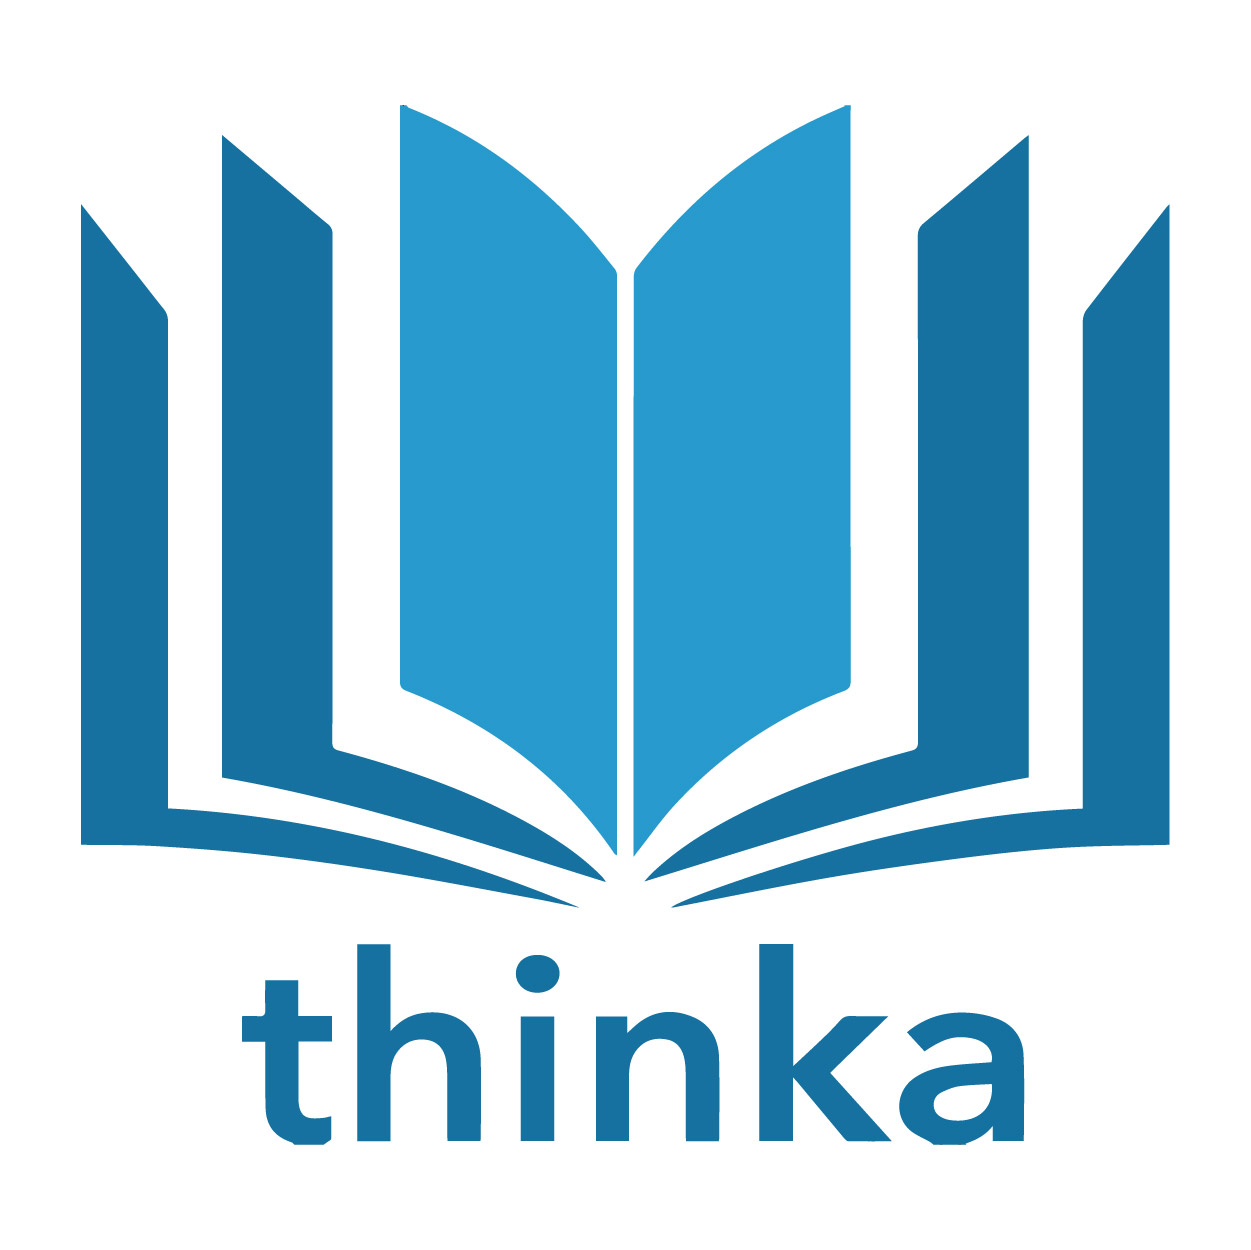 thinka Incorporation Limited